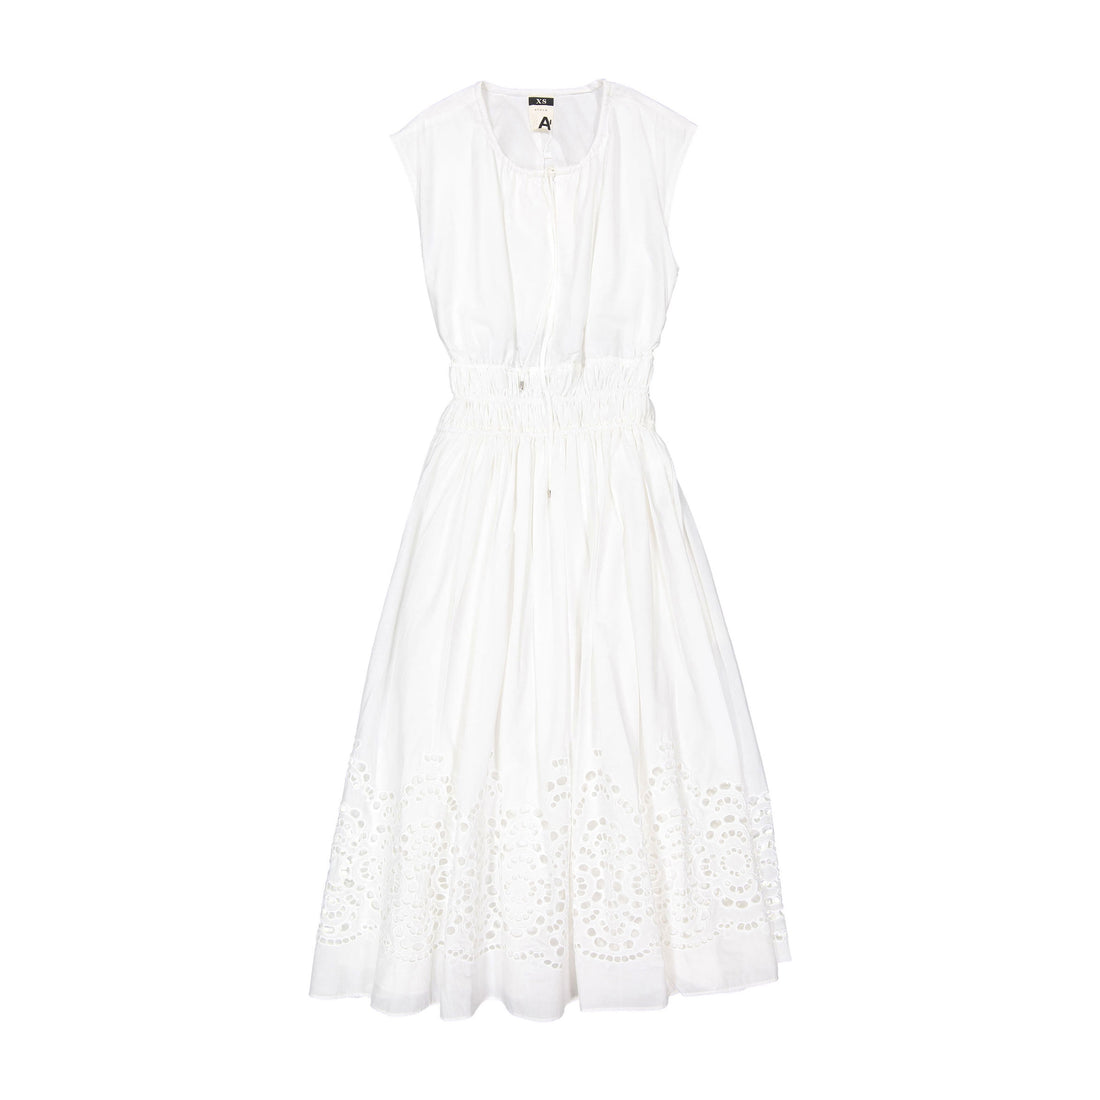 A4 White Eyelet Bottom Sleeveless Dress